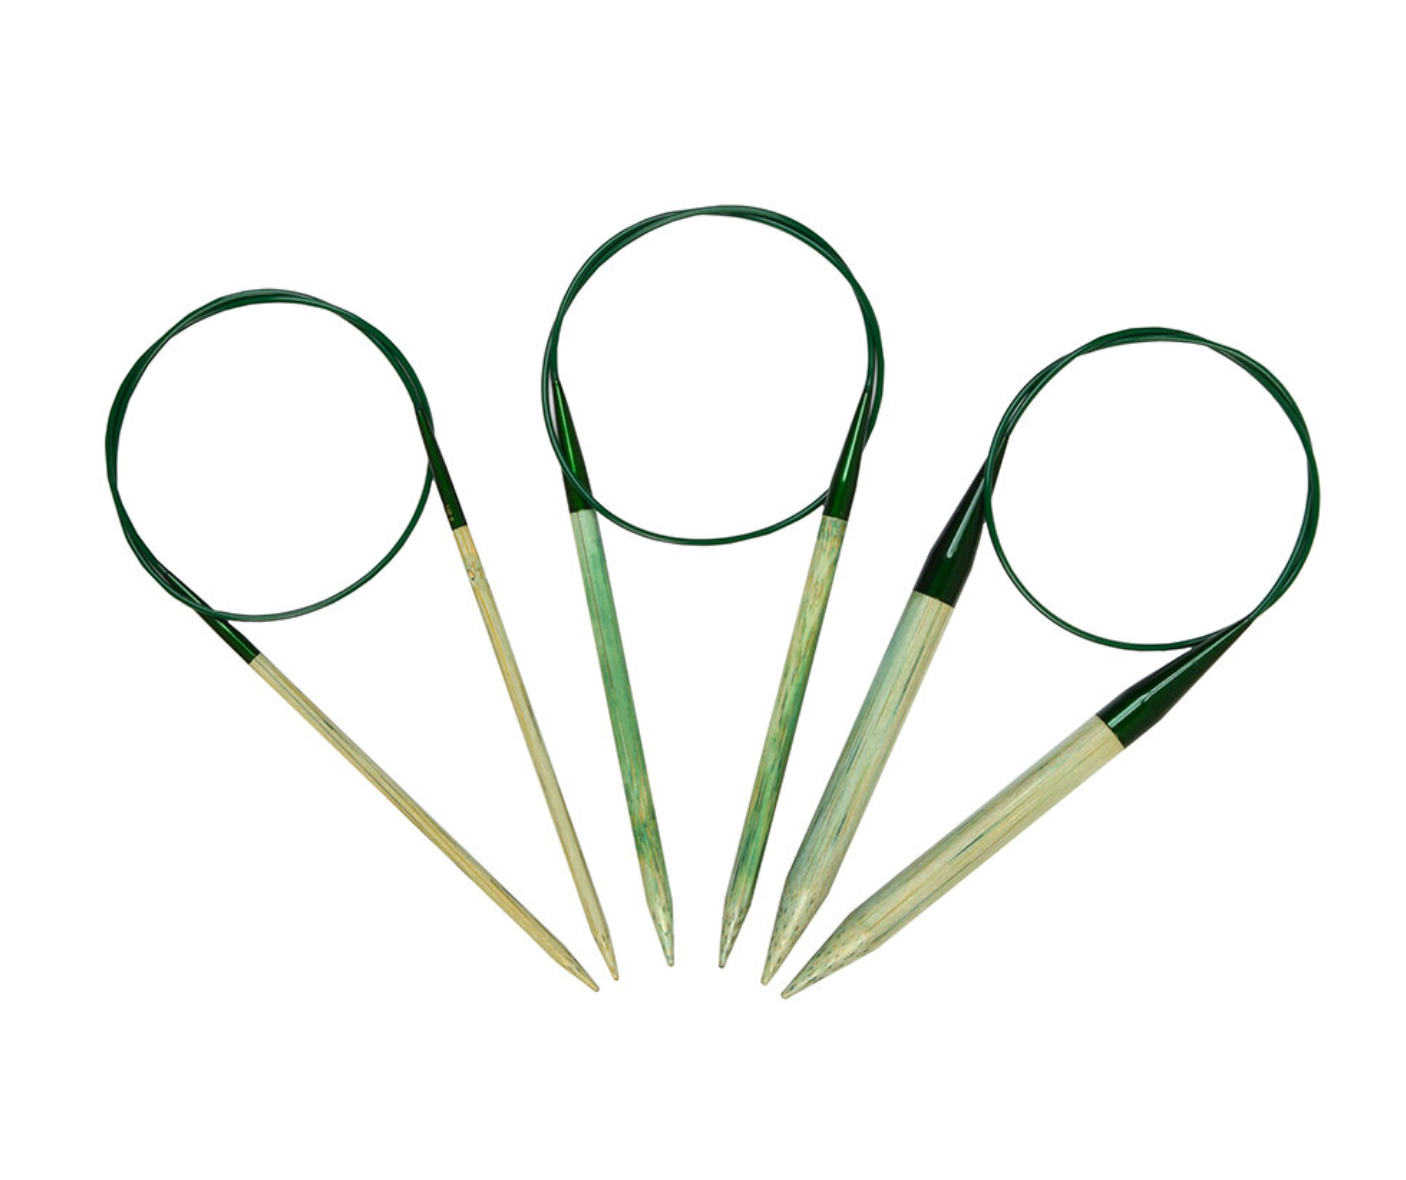 Bamboo Circular Knitting Needles 40 Size 4/3.5mm